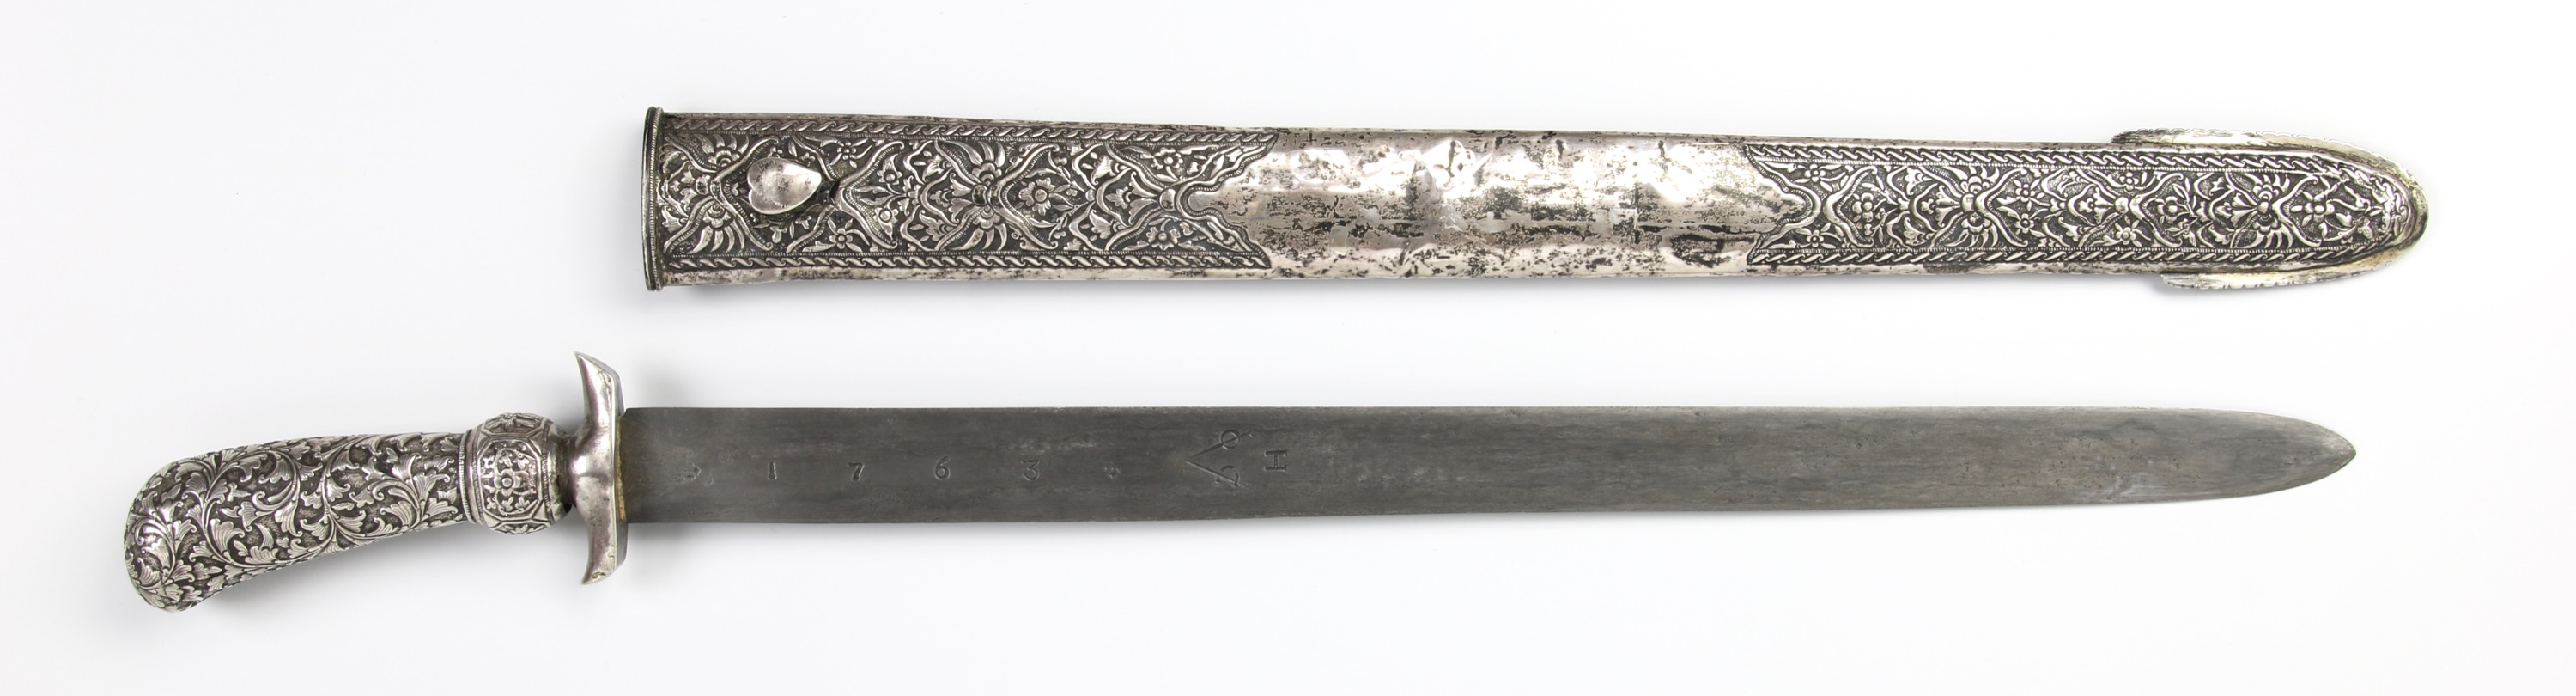 Pedang lurus 1763 Hoorn